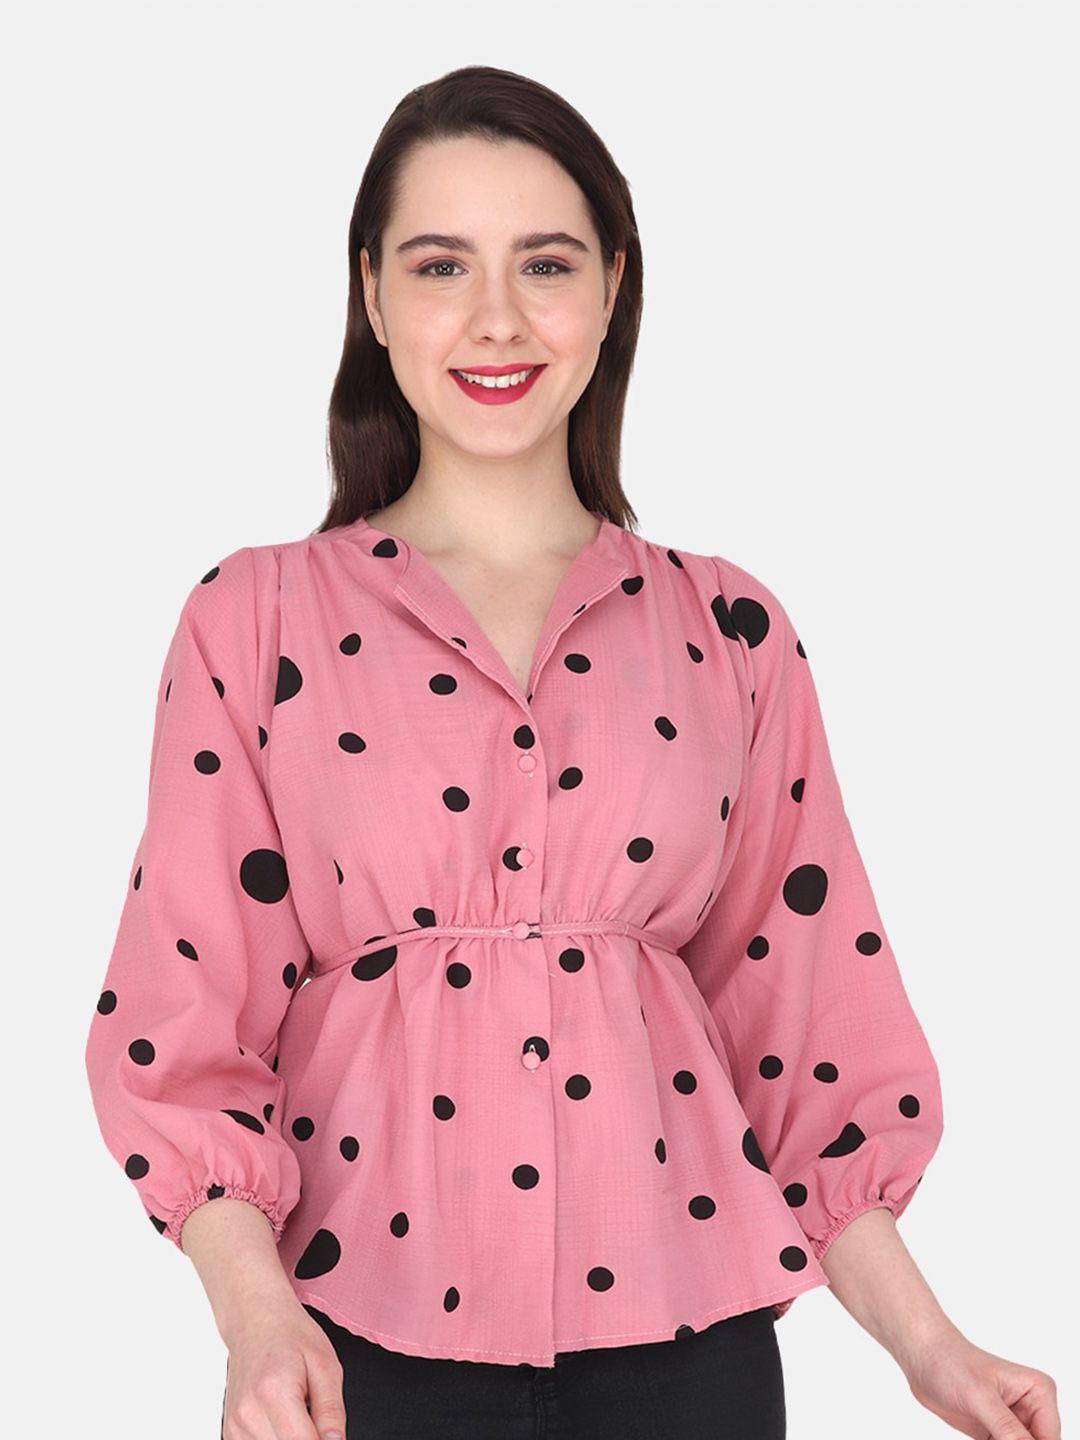 albion puff sleeves polka dots print cinched waist top